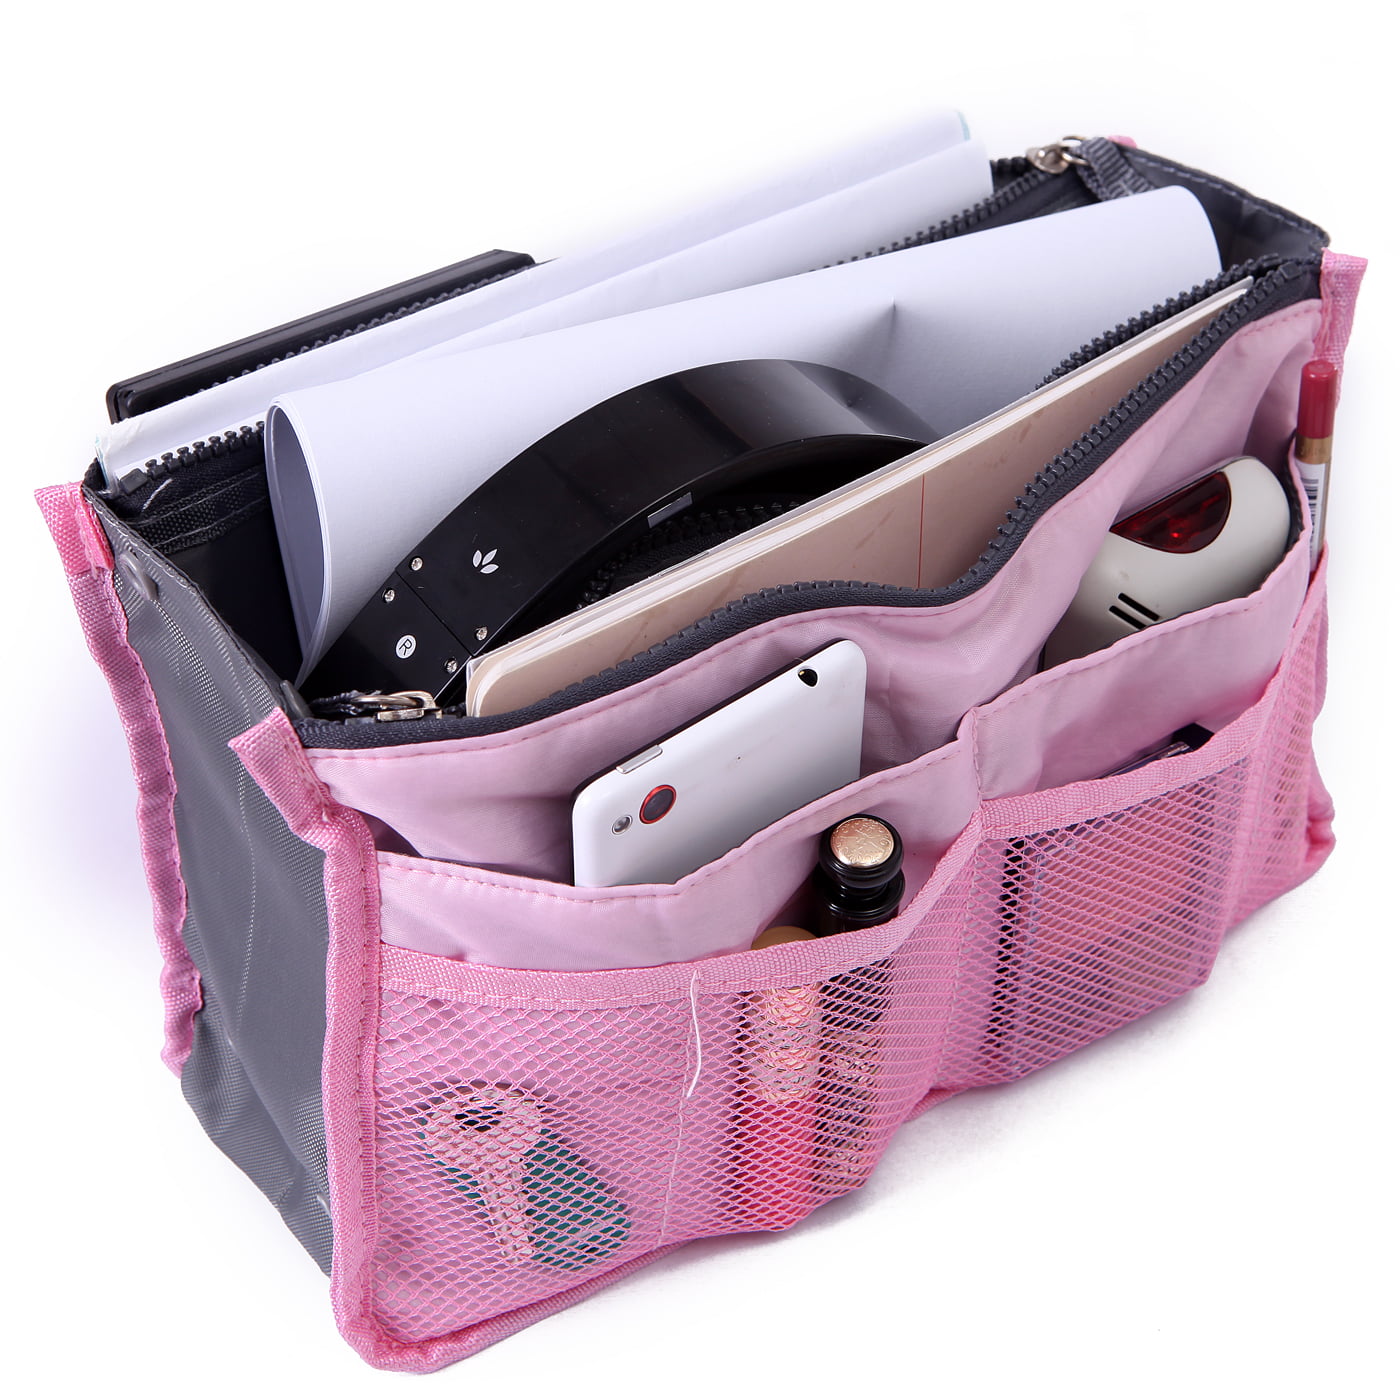 HDE Expandable 13 Pocket Handbag Insert Purse Organizer with Handles (Pink) - www.waterandnature.org